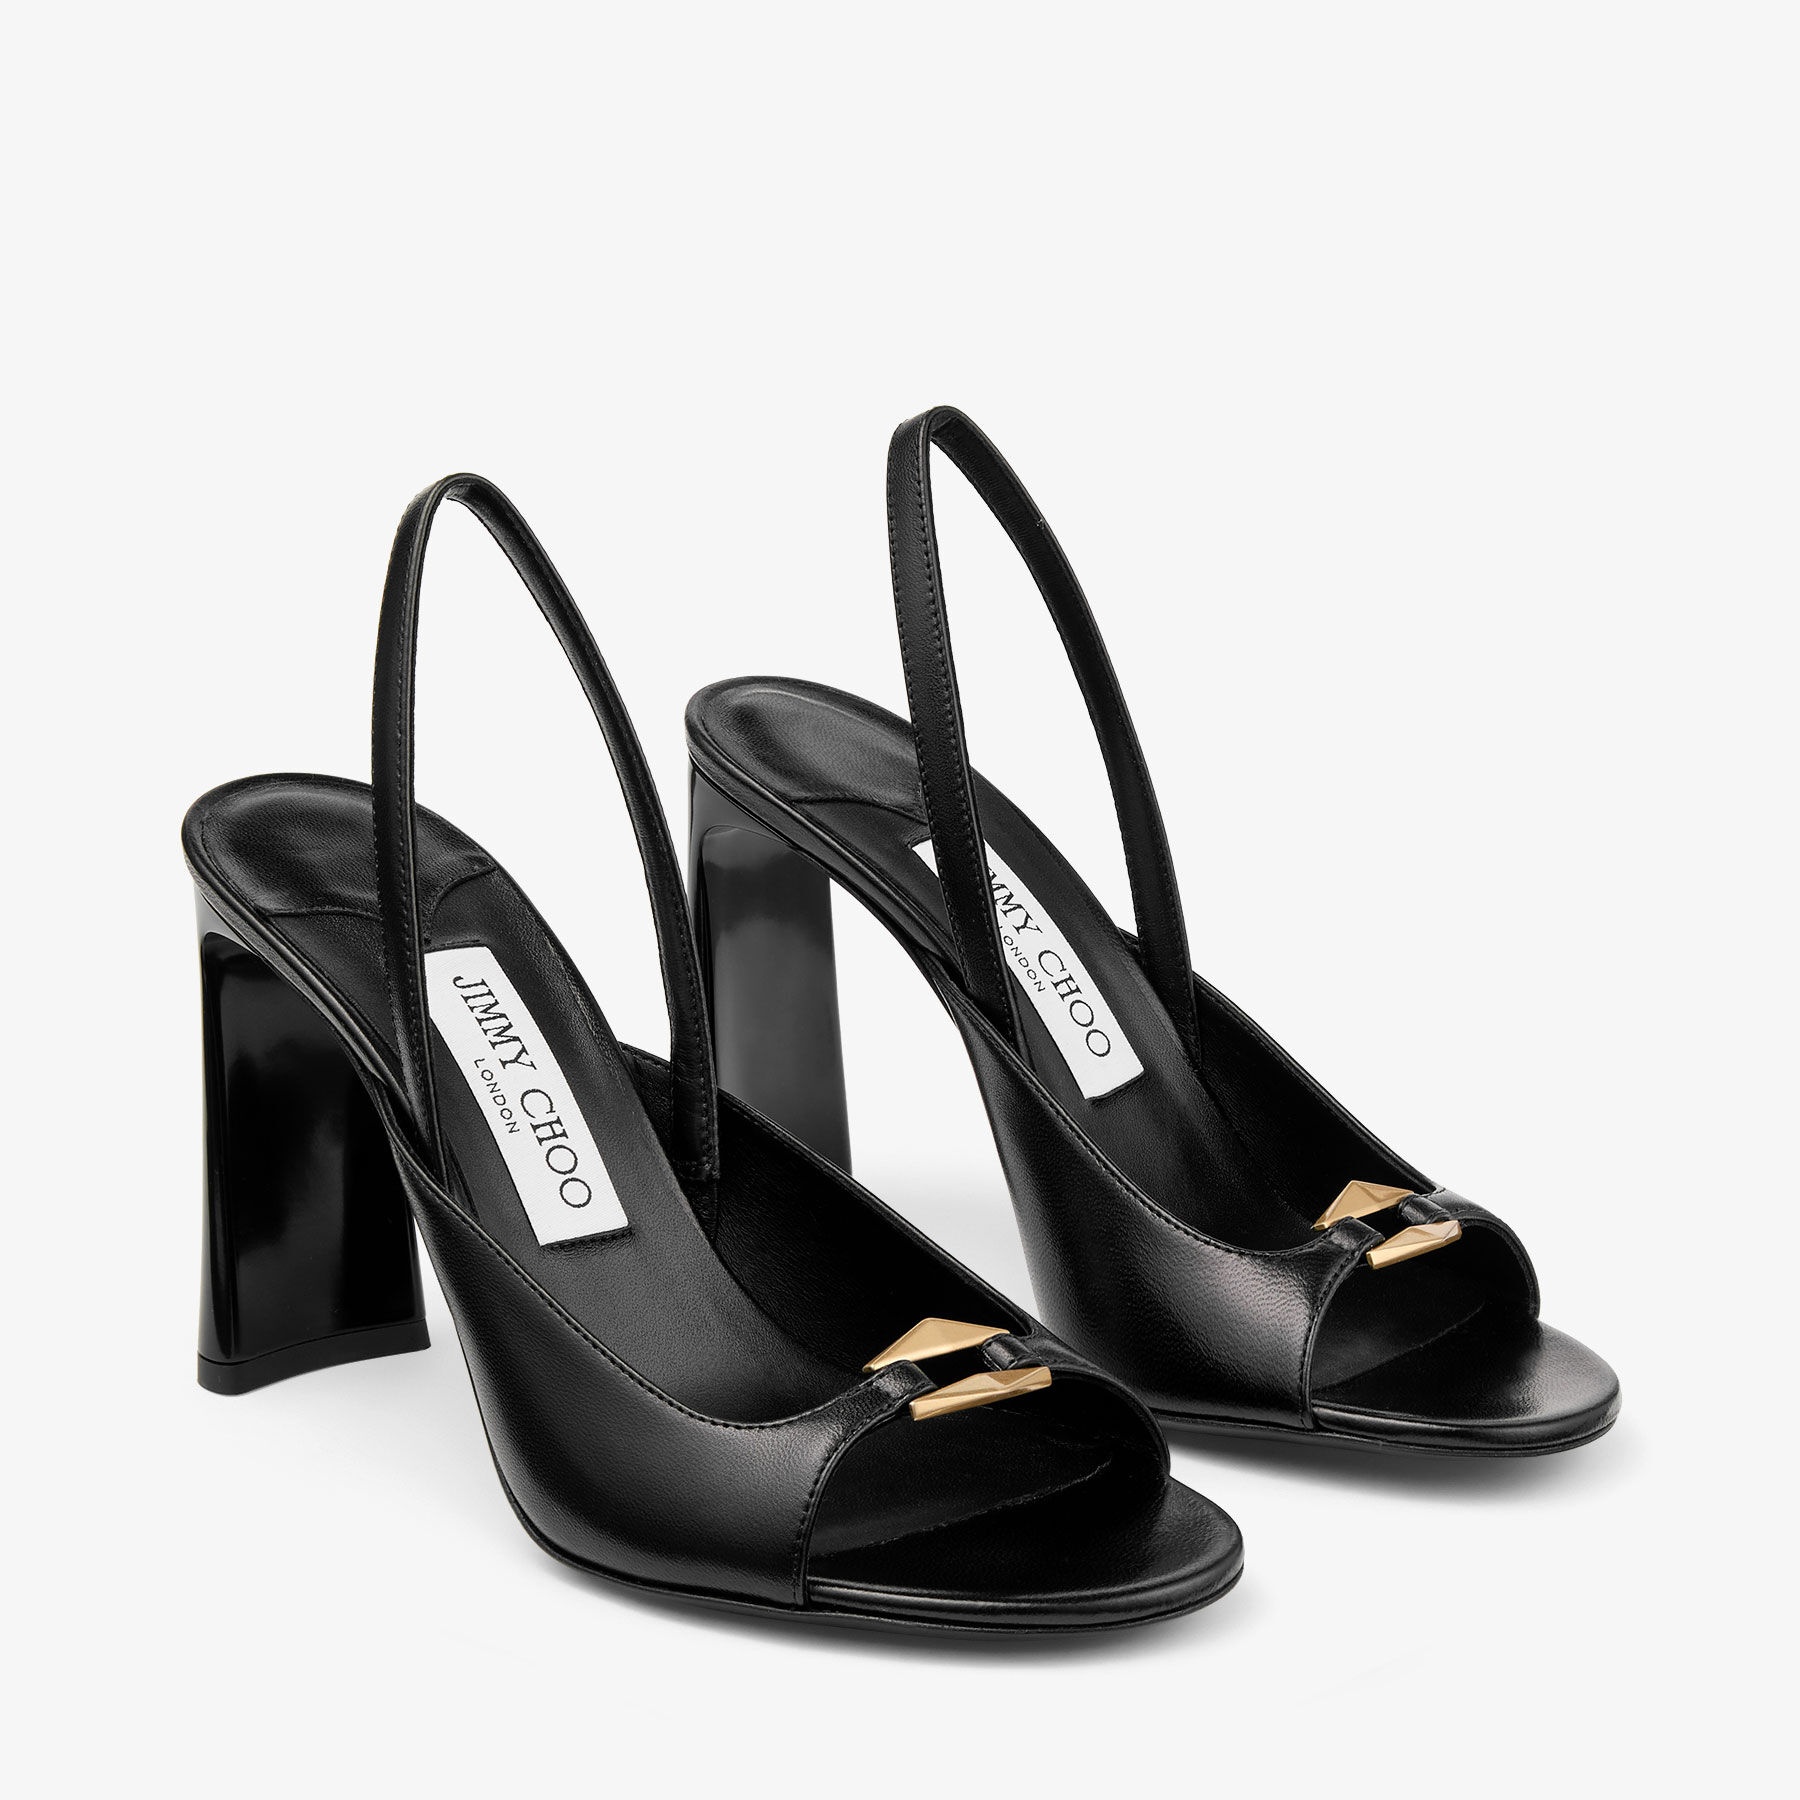 Lev 95
Black Nappa Leather Sandals - 2